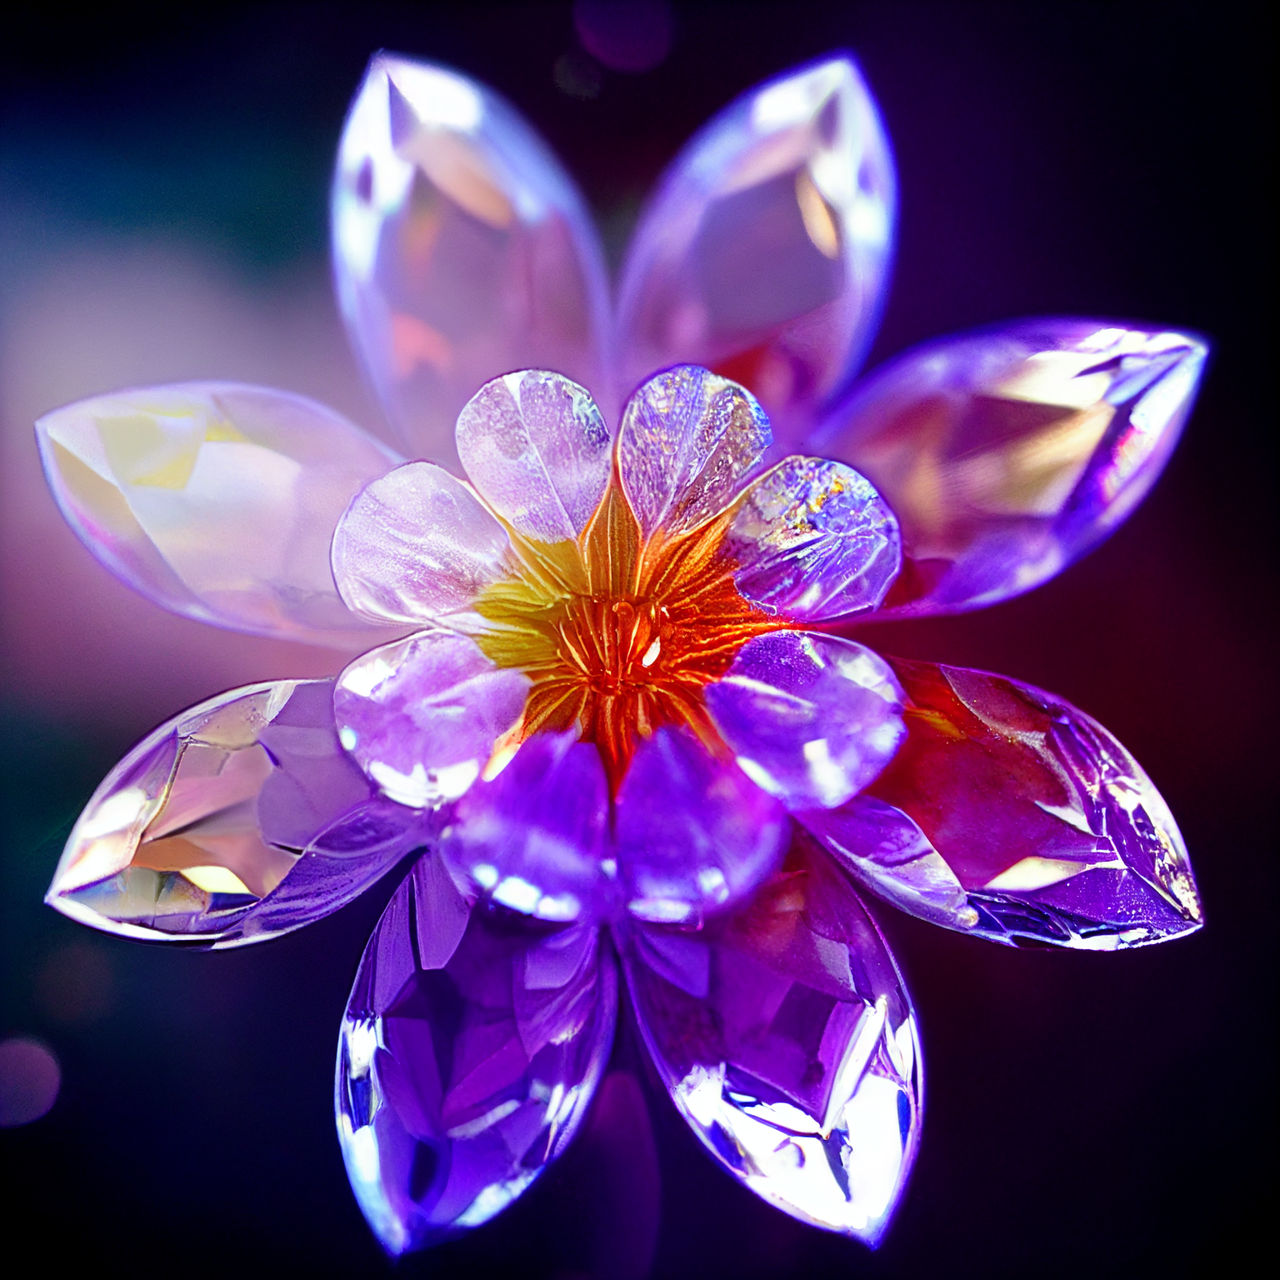 Crystal Flowers 1.1 by sugoidigi on DeviantArt